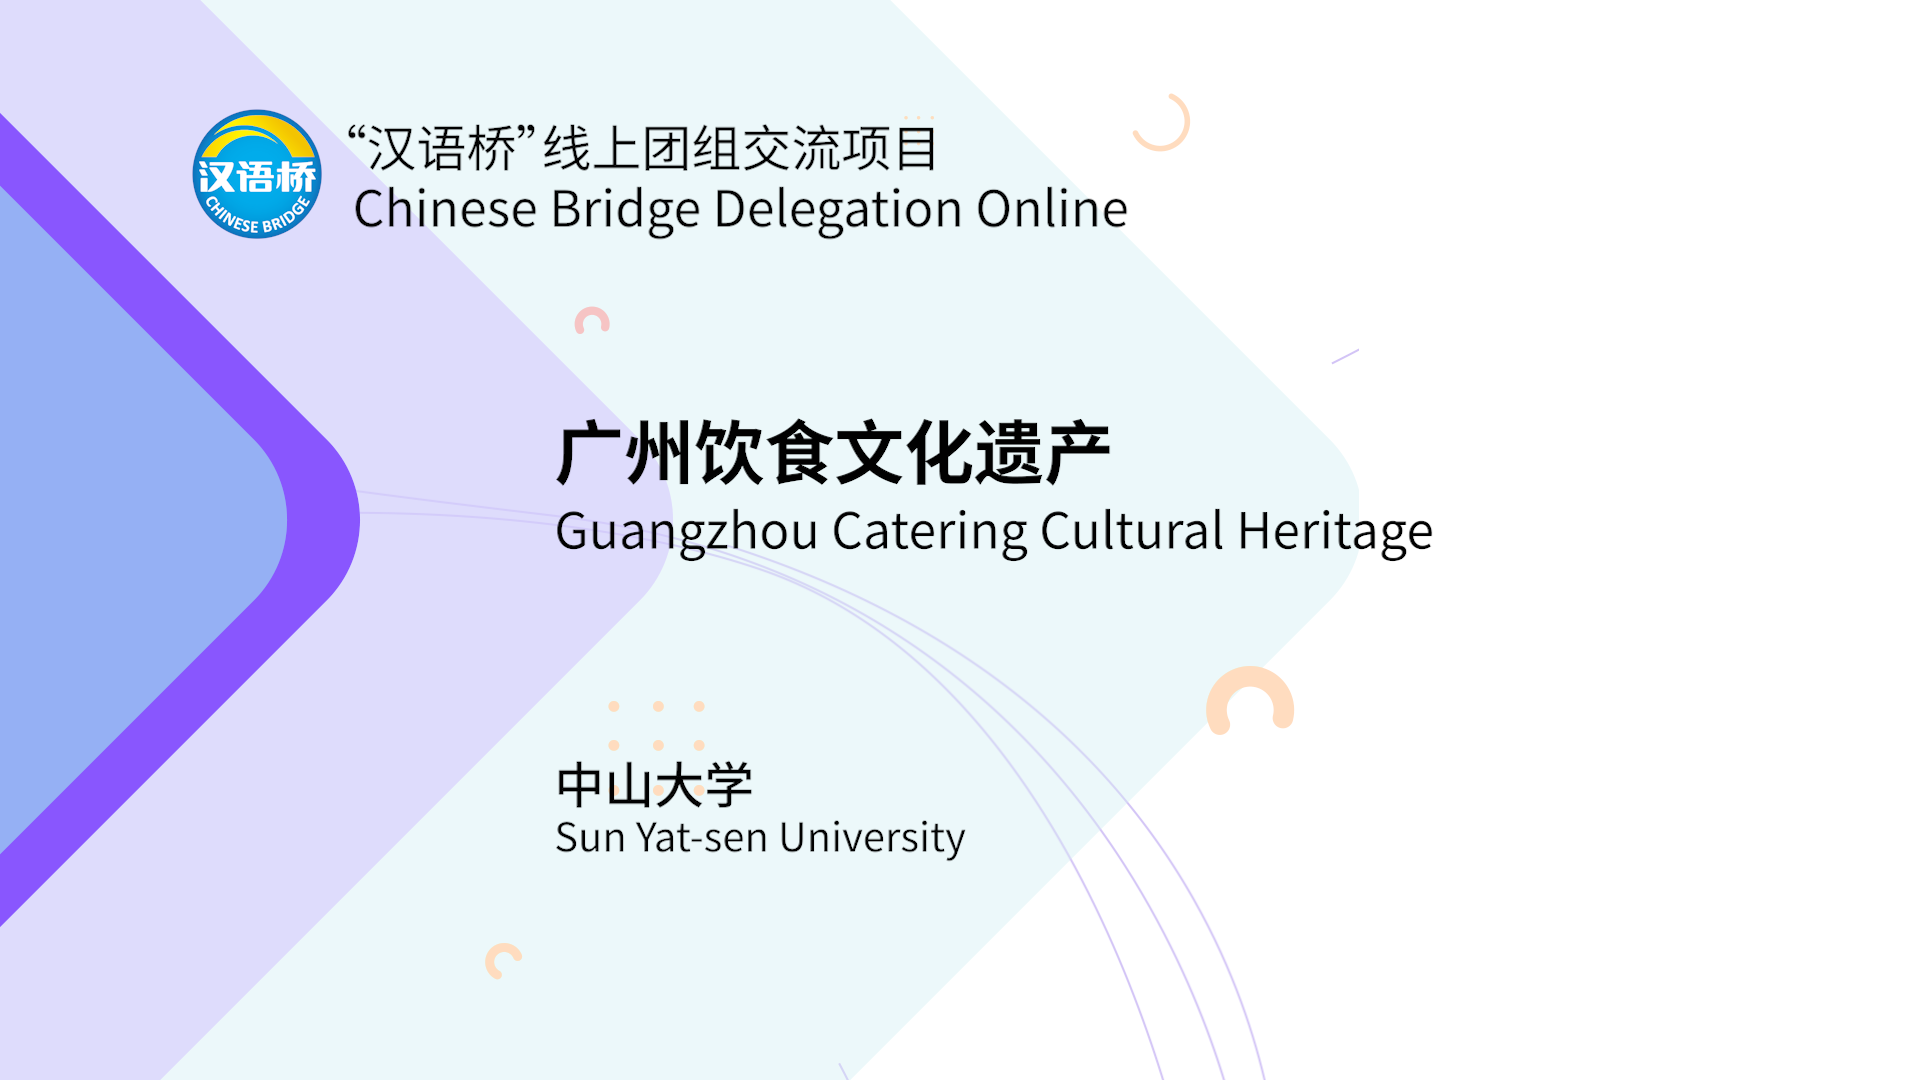 Guangzhou Catering Cultural Heritage